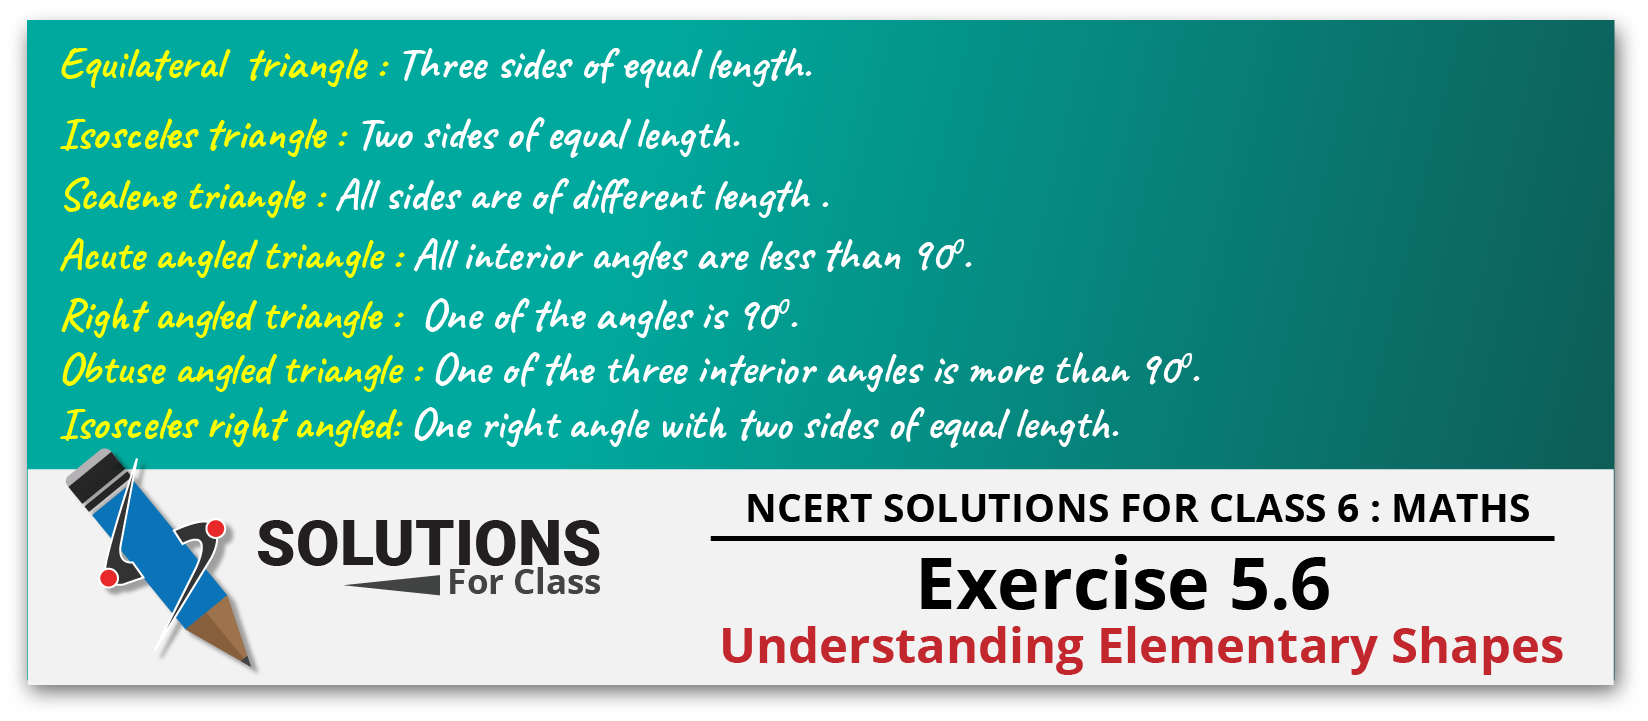 Understanding Elementary Shapes, Exercise 5.6